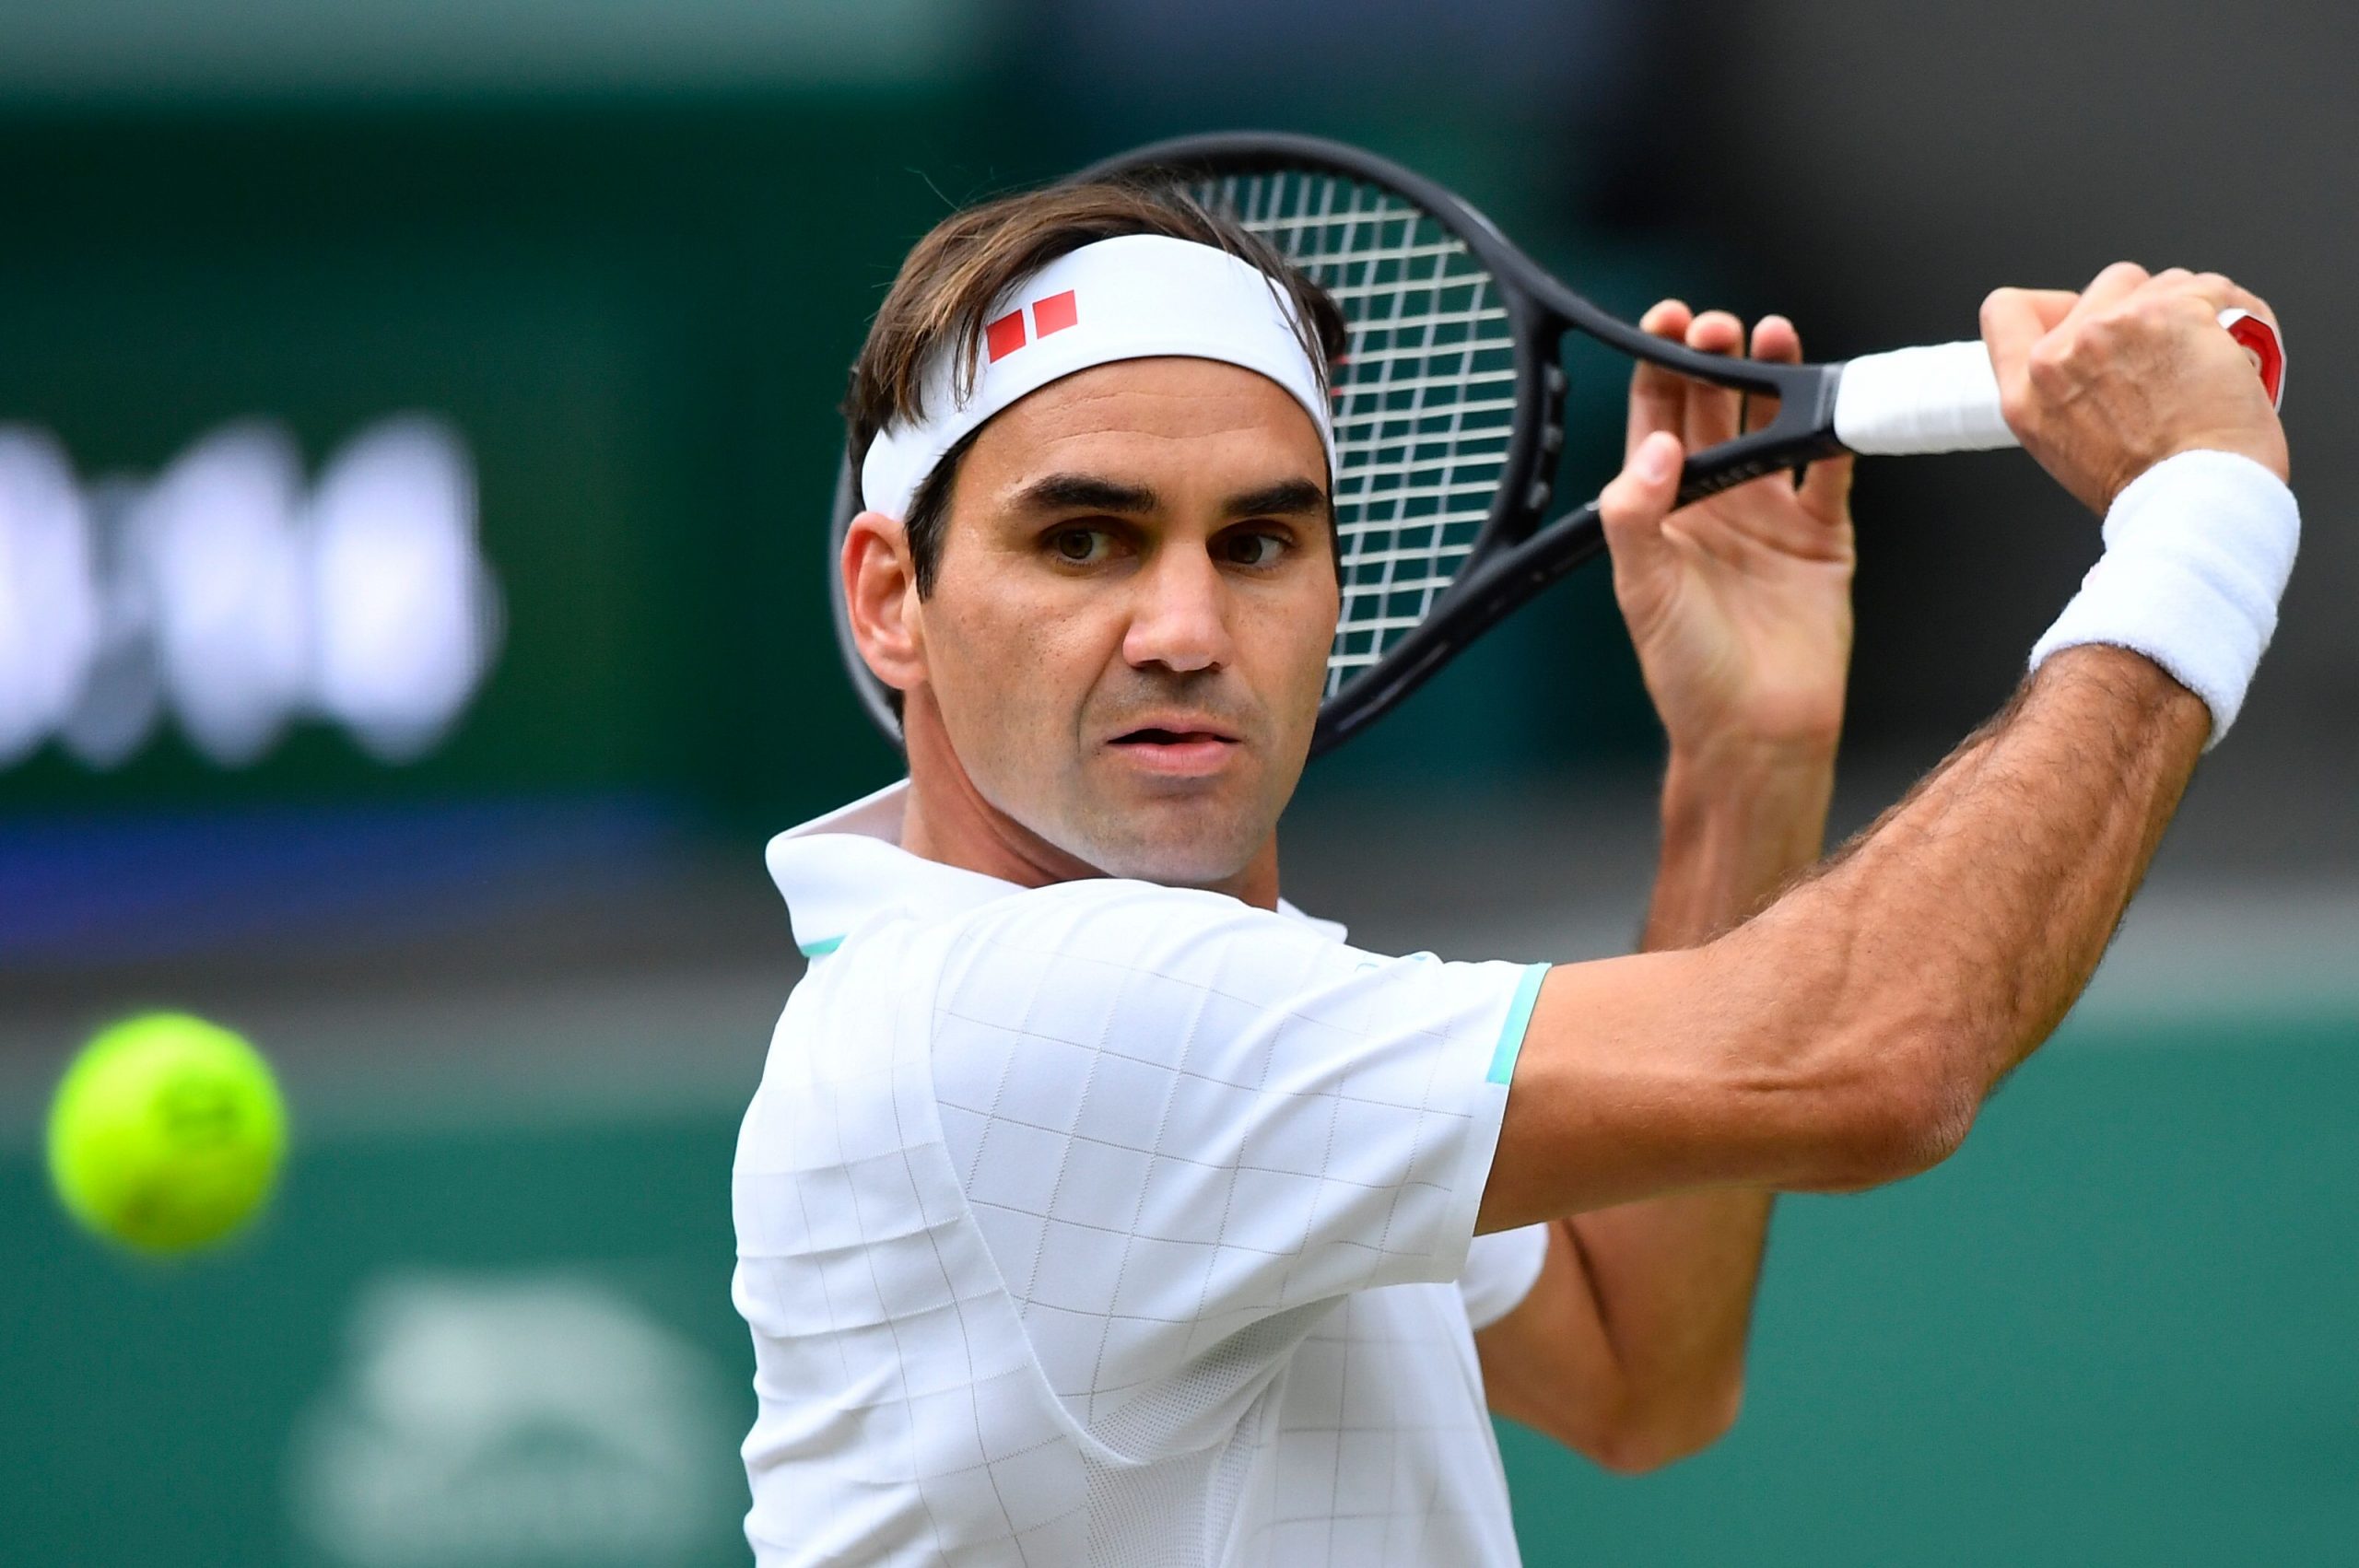 El suizo Roger Federer durante su partido de tercera ronda de Wimbledon contra Cameron Norrie, en Wimbledon. Foto: EFE